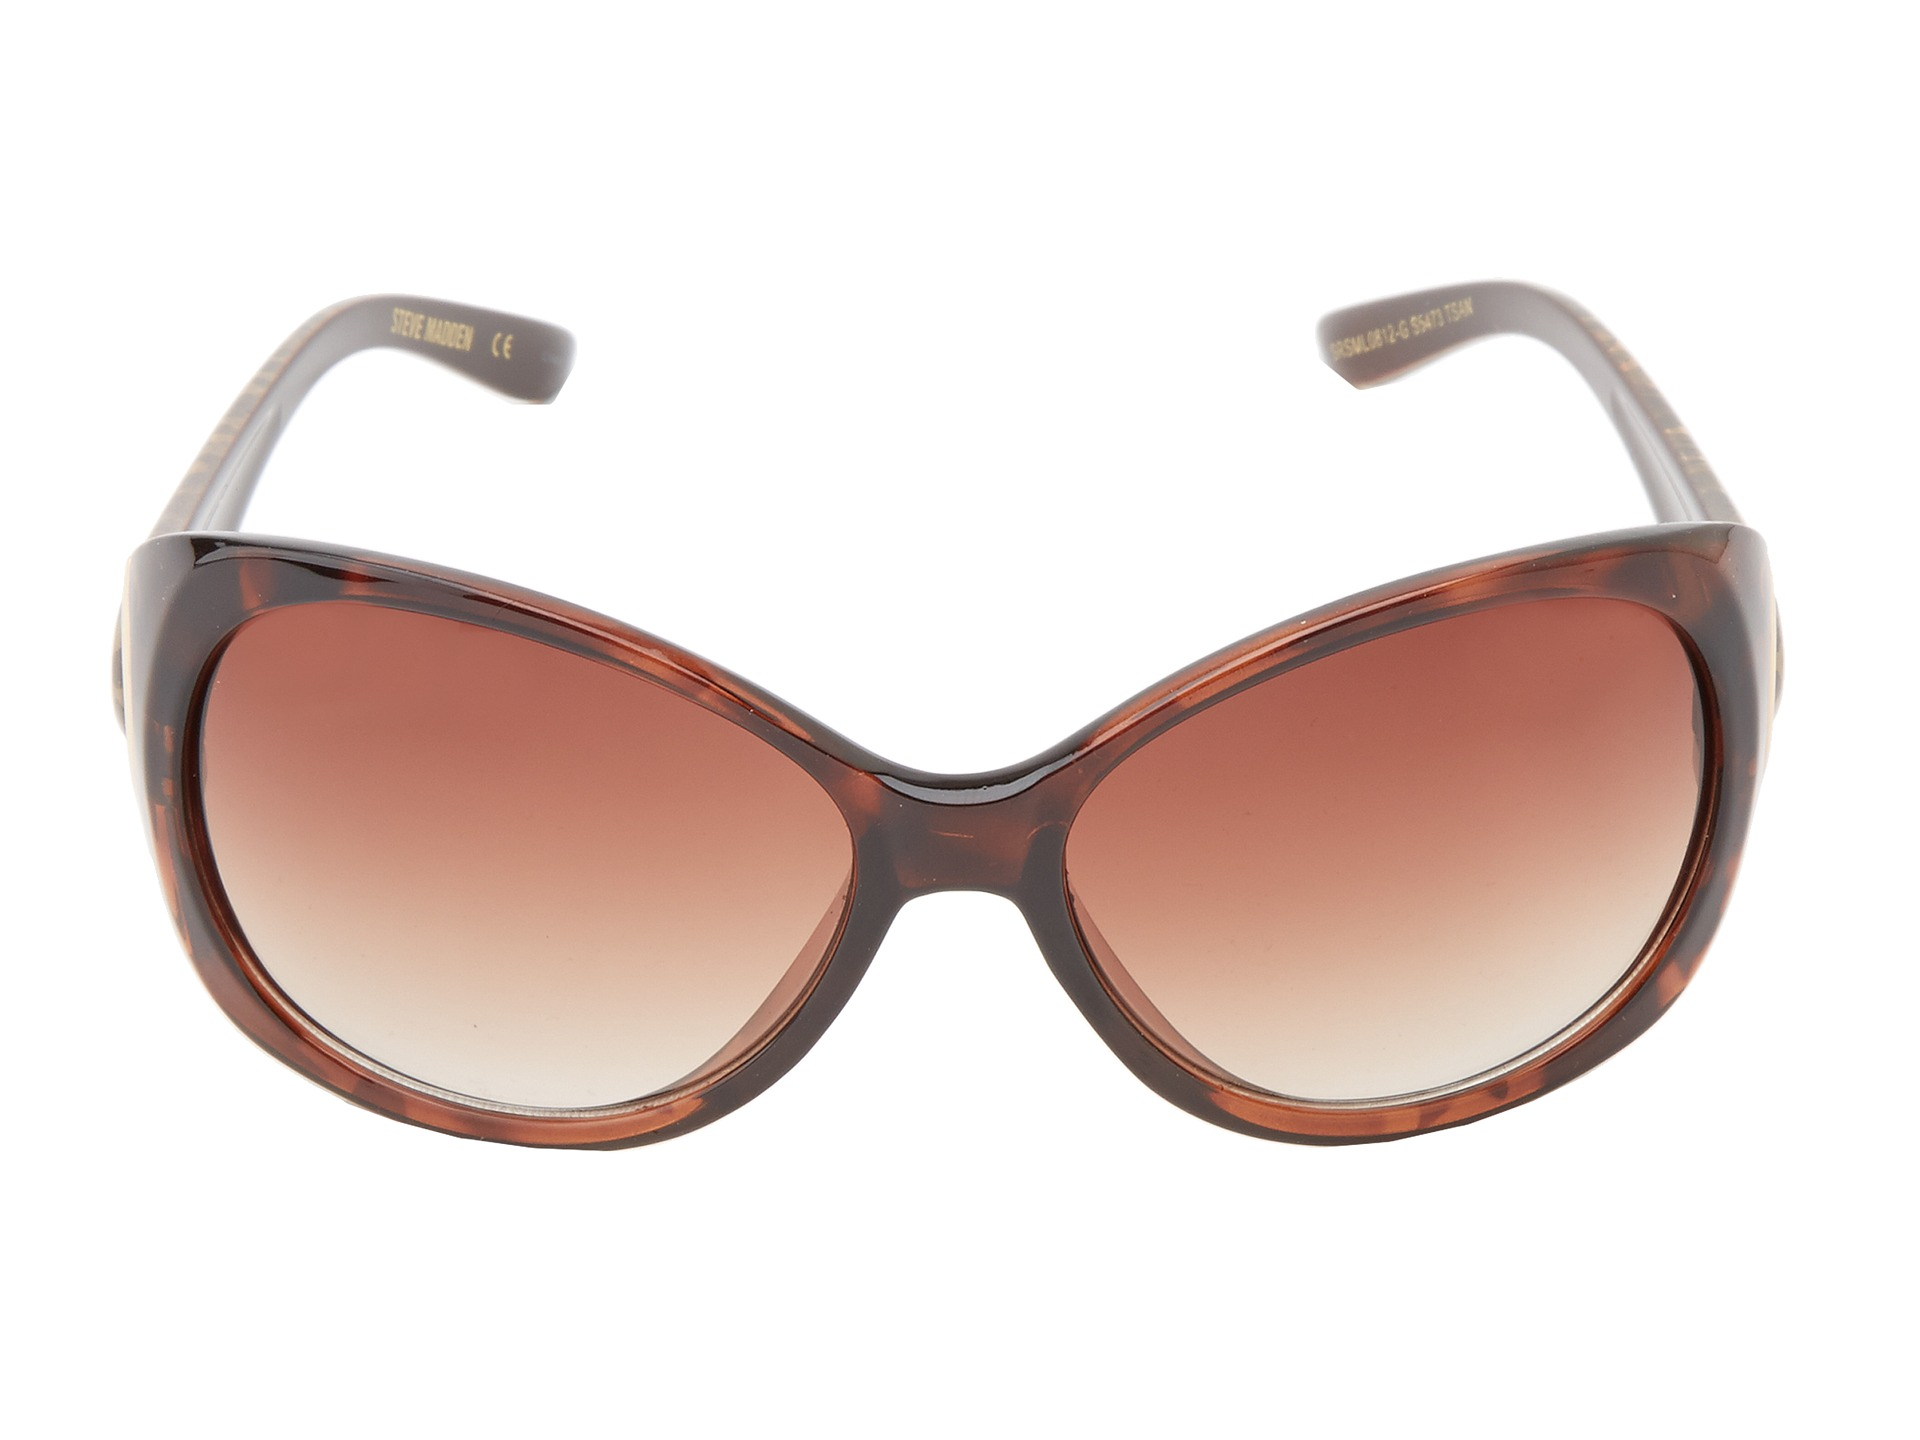 Steve Madden sunglasses in Brown (Tort/Leopard) | Lyst